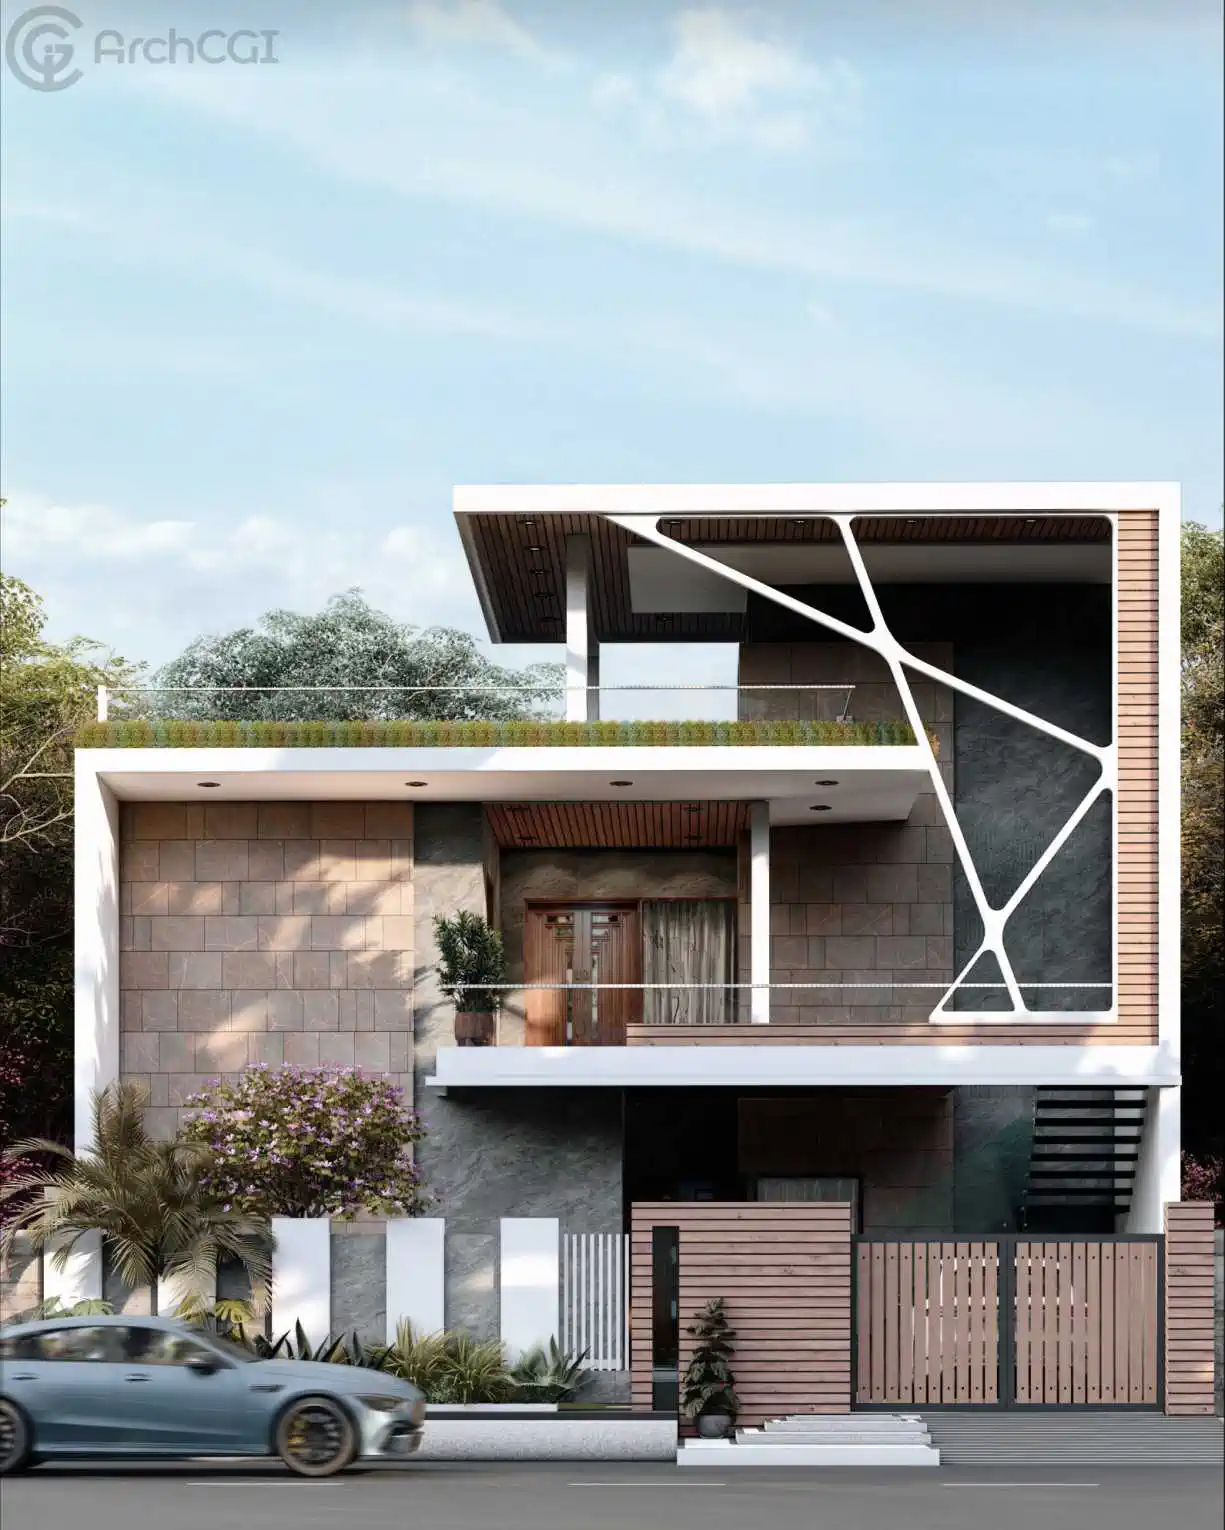 3D Contemporary, Vibrant and Creative House Design | ArchCGI